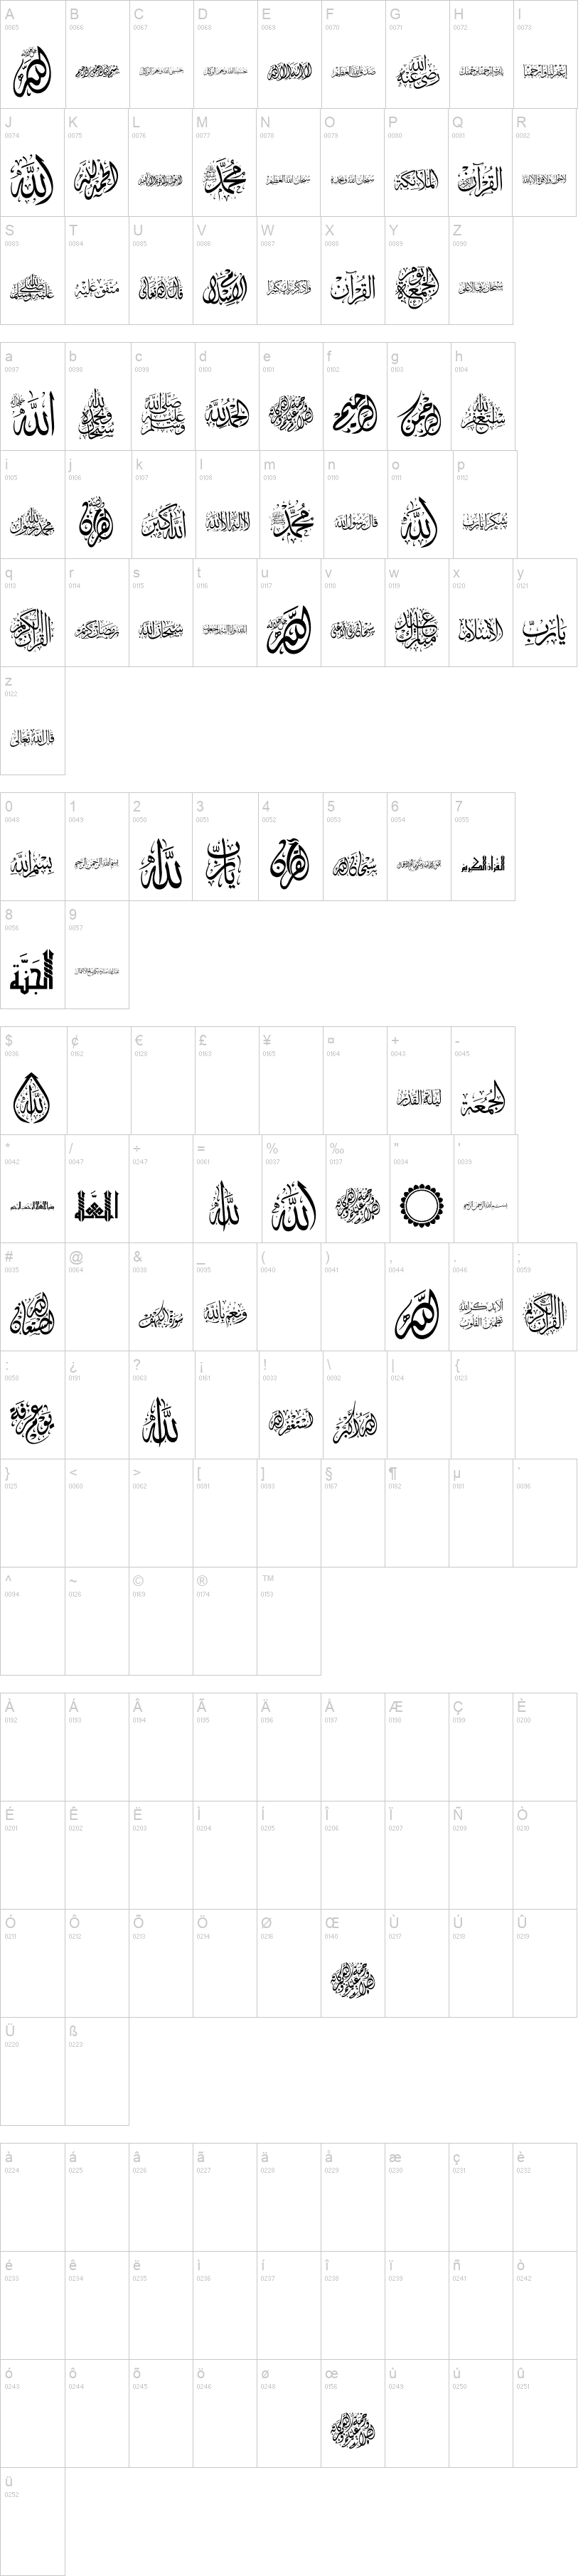 Arabic Islamic